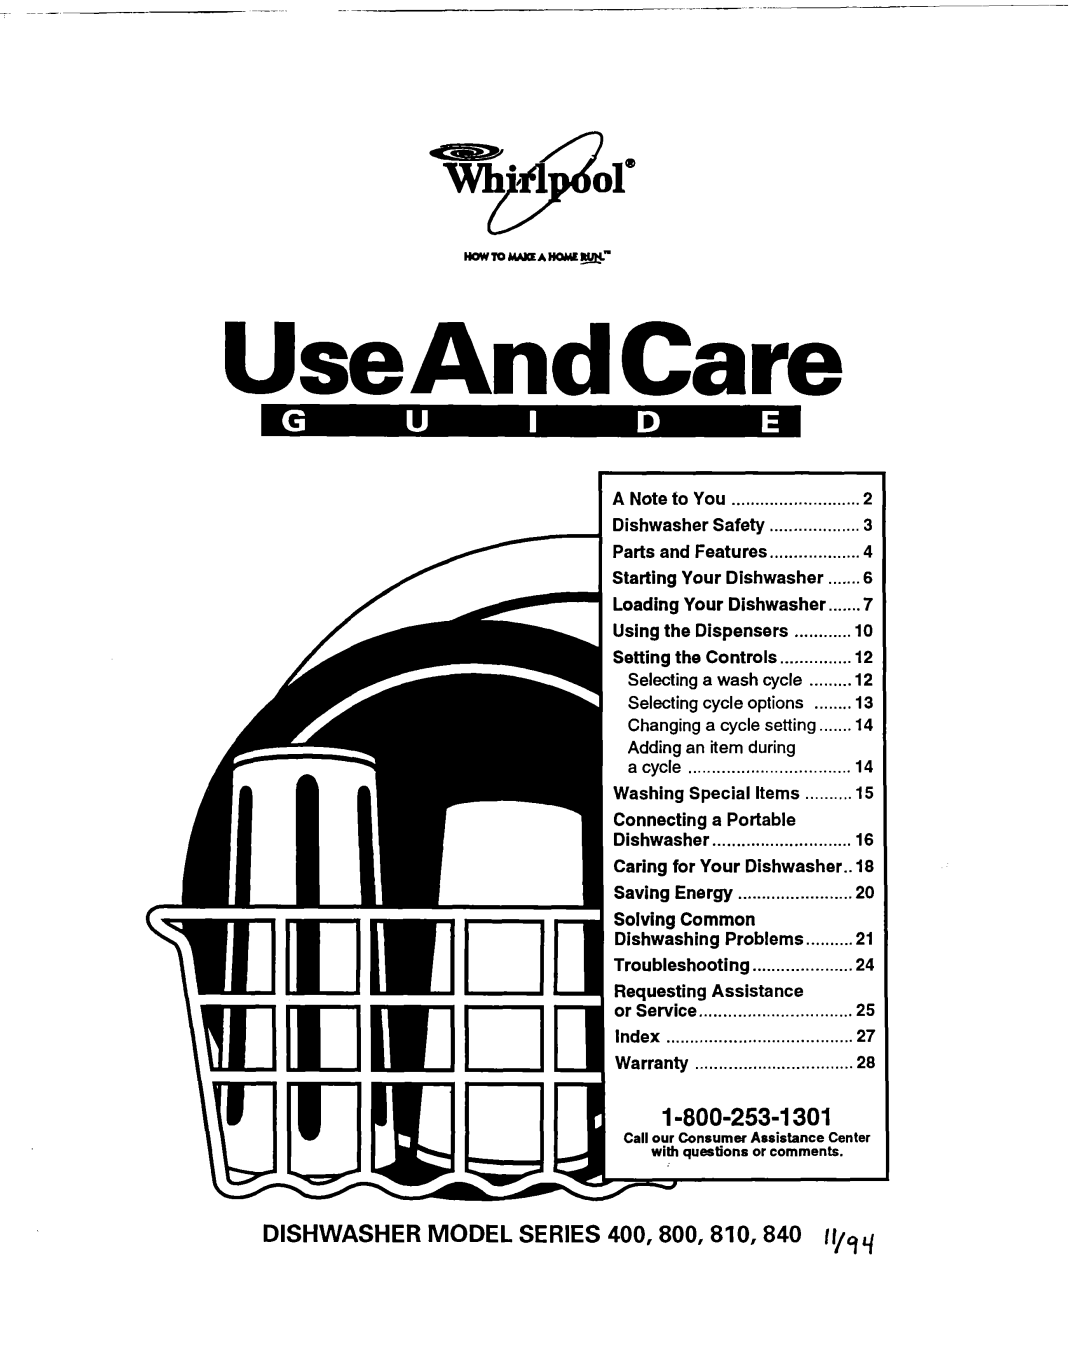 Whirlpool warranty 1-800-253-I301, DISHWASHER MODEL SERIES 400,800,810,840 ryqq, UseAndCare 